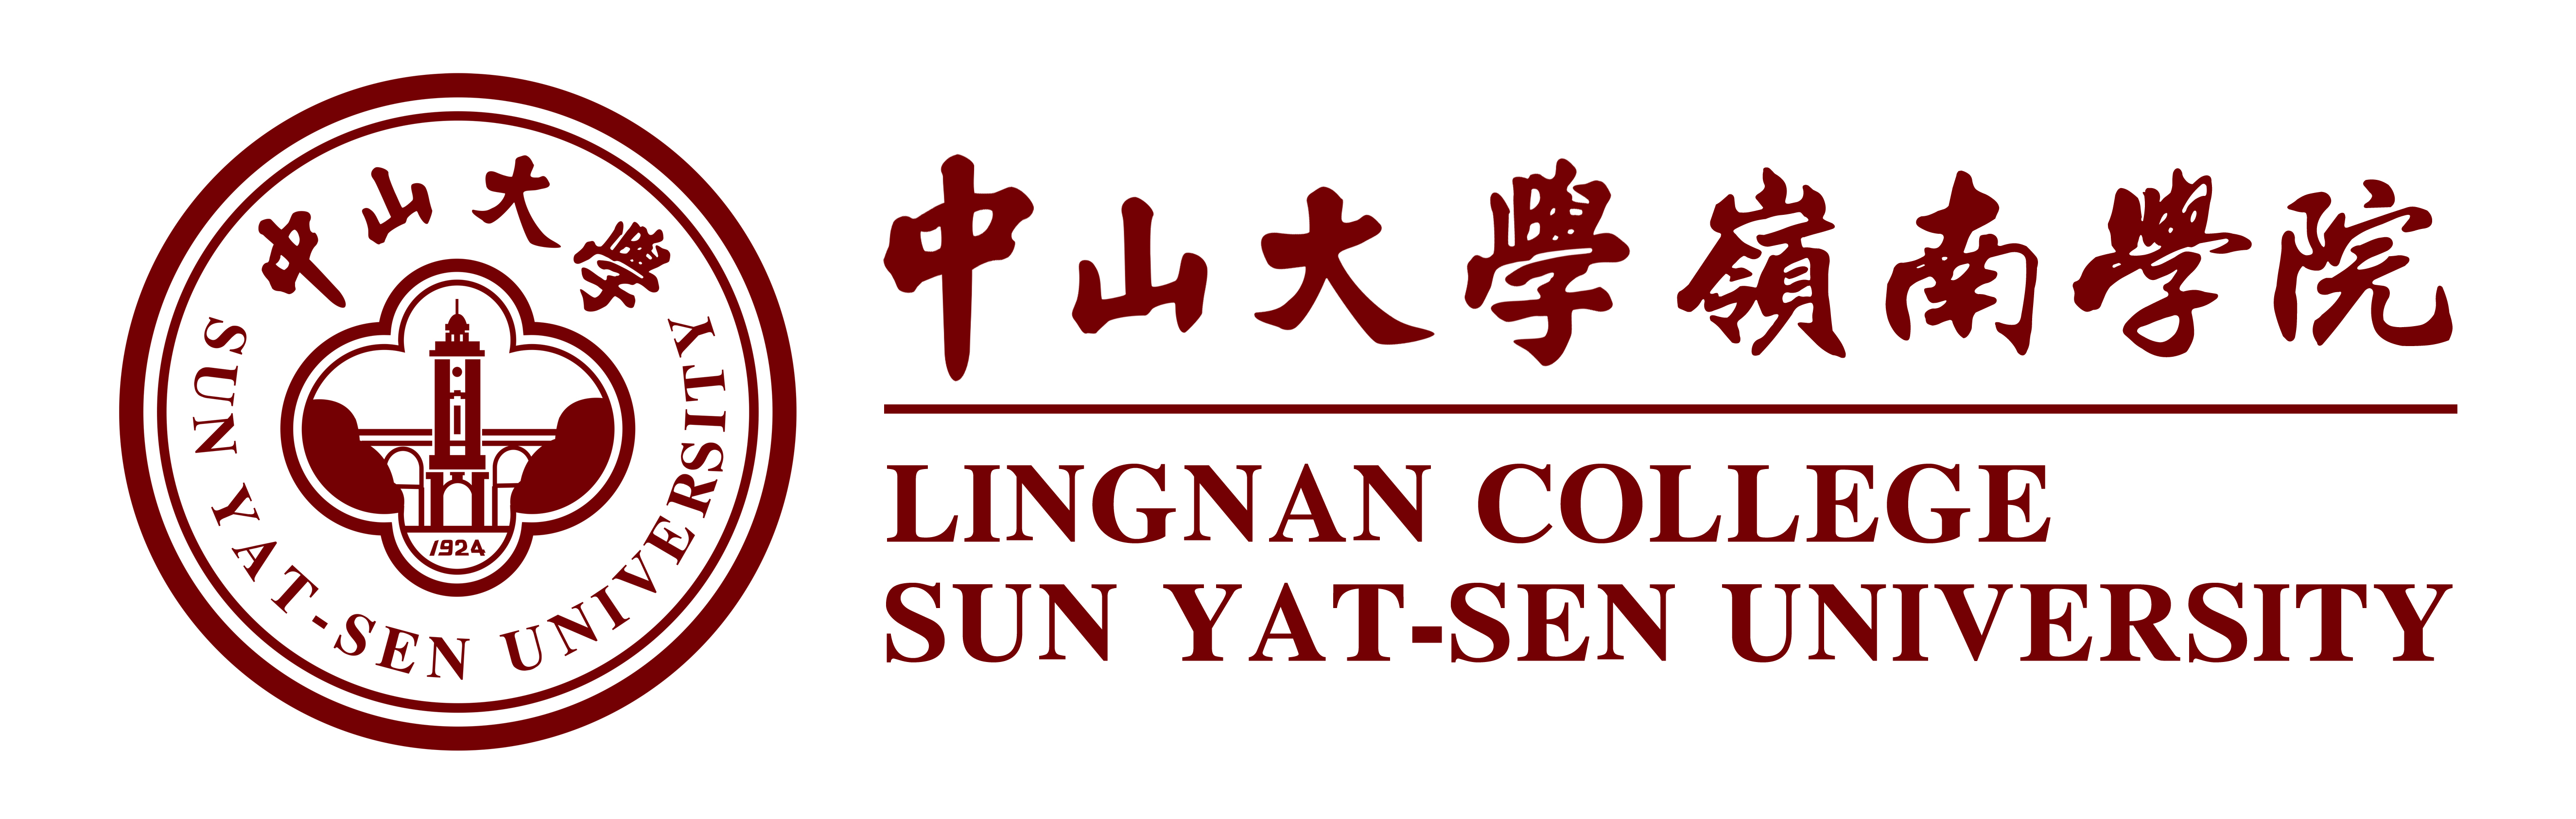 Lingnan College Logo